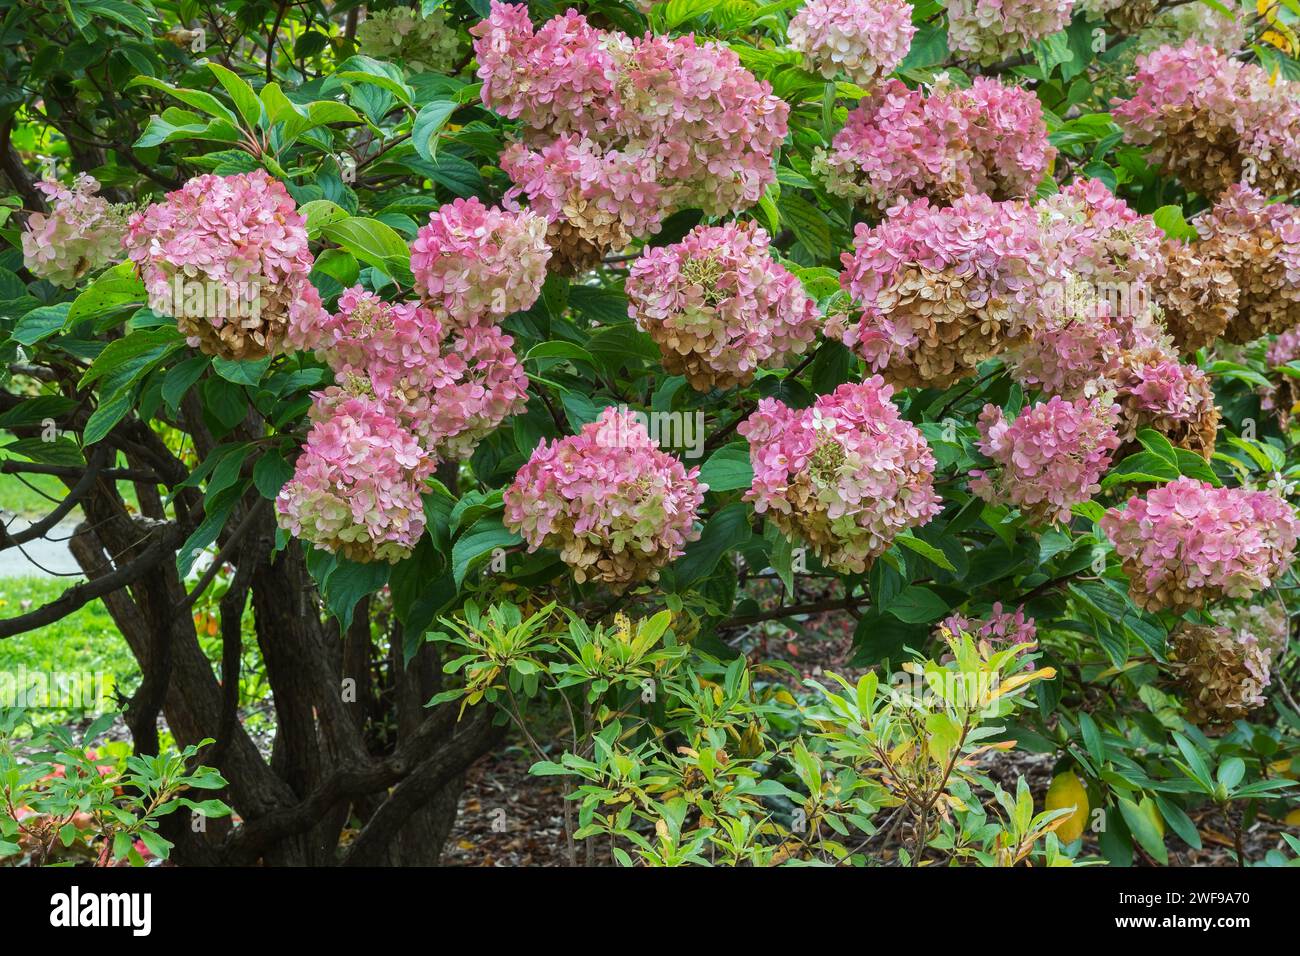 Hortensie paniculata 'Grandiflora' - PeeGee Hortensie im Herbst. Stockfoto